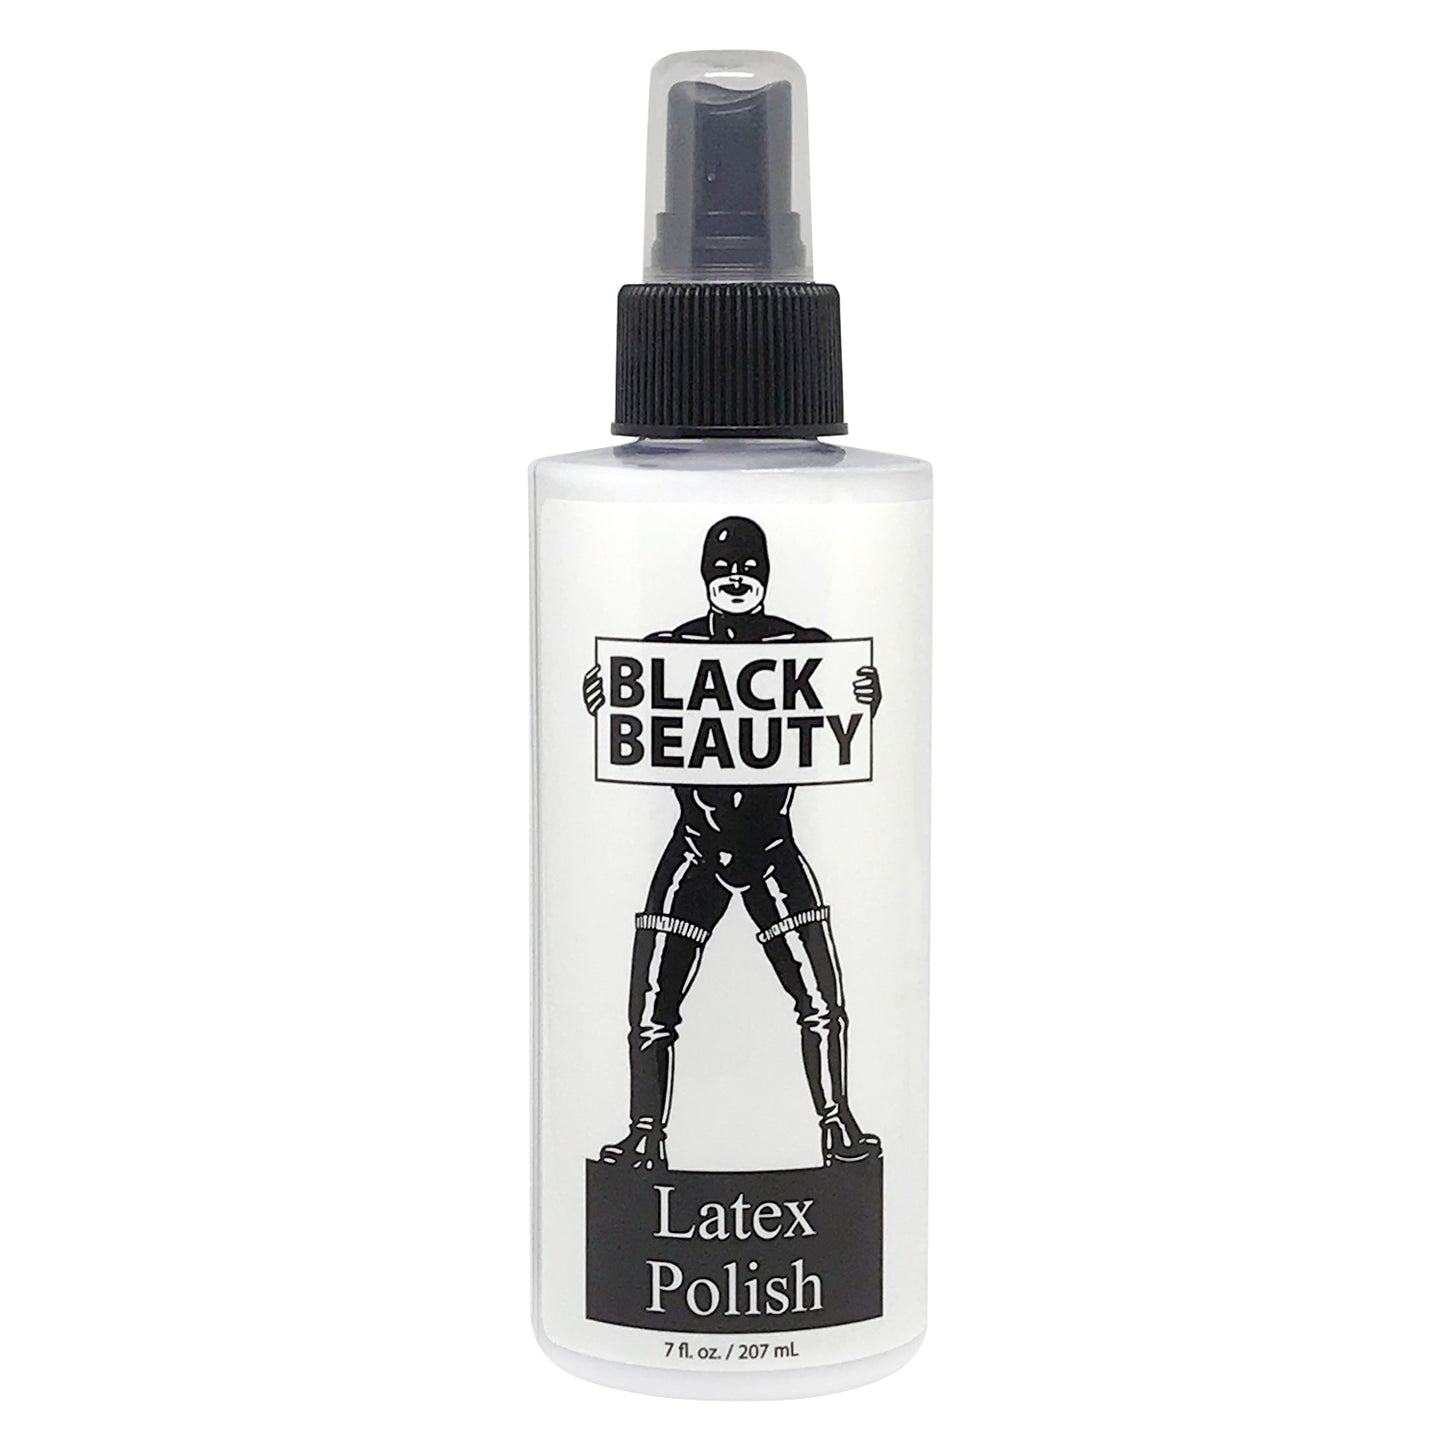 Black Beauty Latex Polish Spray Bottle 8Oz/236Ml Default Title - Club X